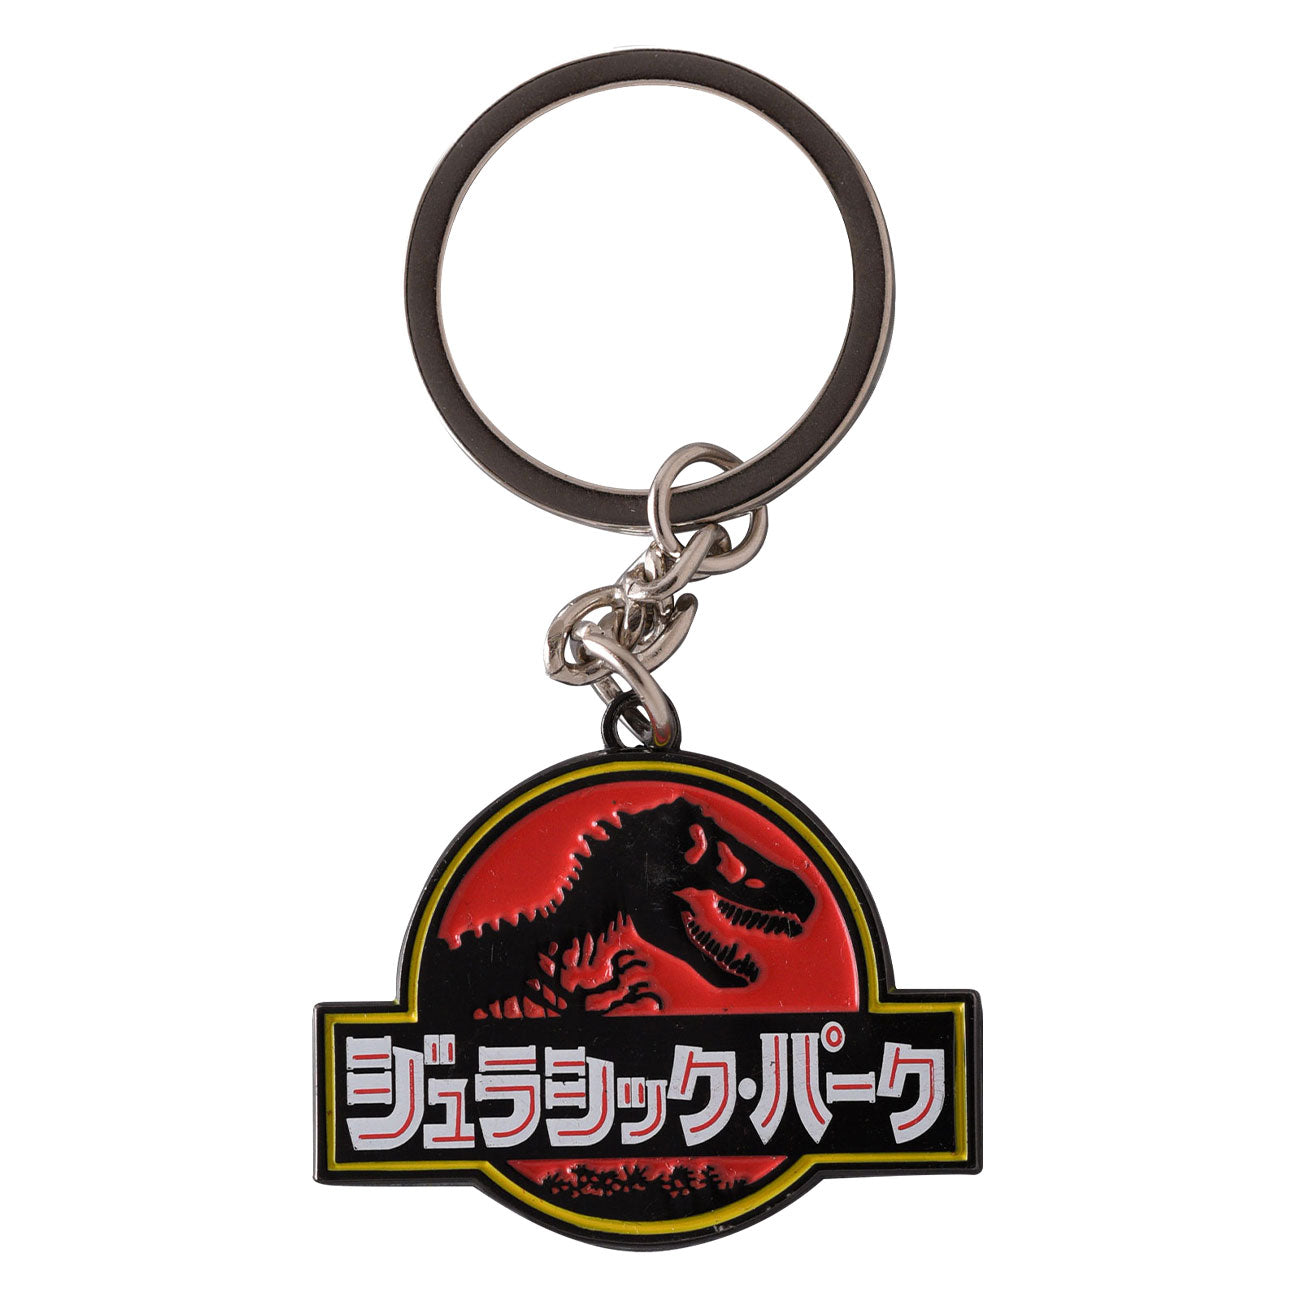 Jurassic Park Limited Edition Key Ring